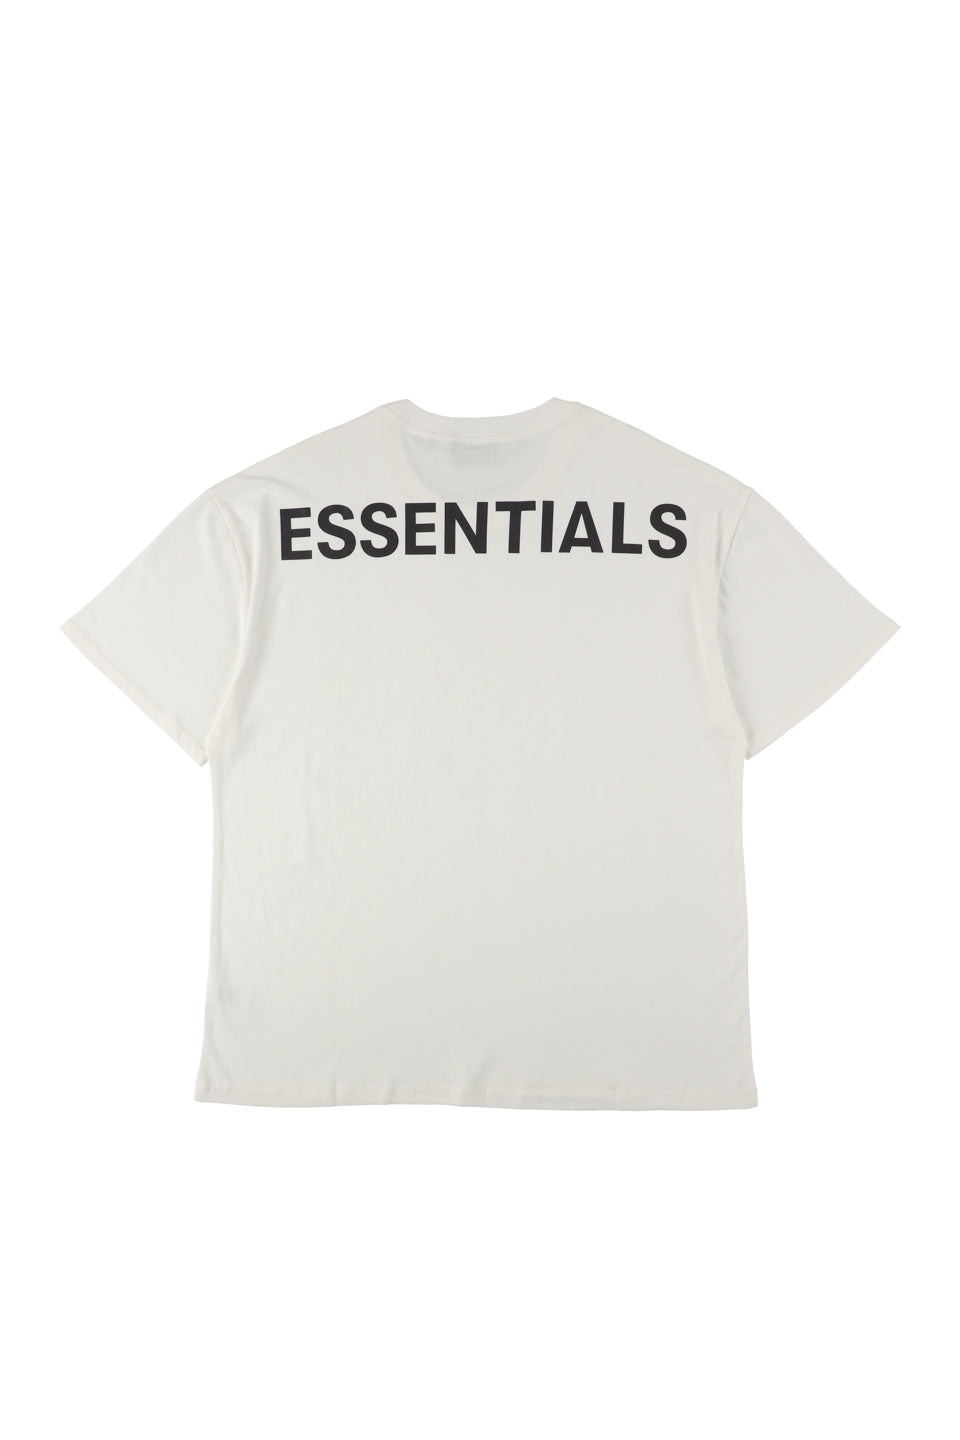 FOG Essentials Tee Tシャツ グリーン 22SS XS